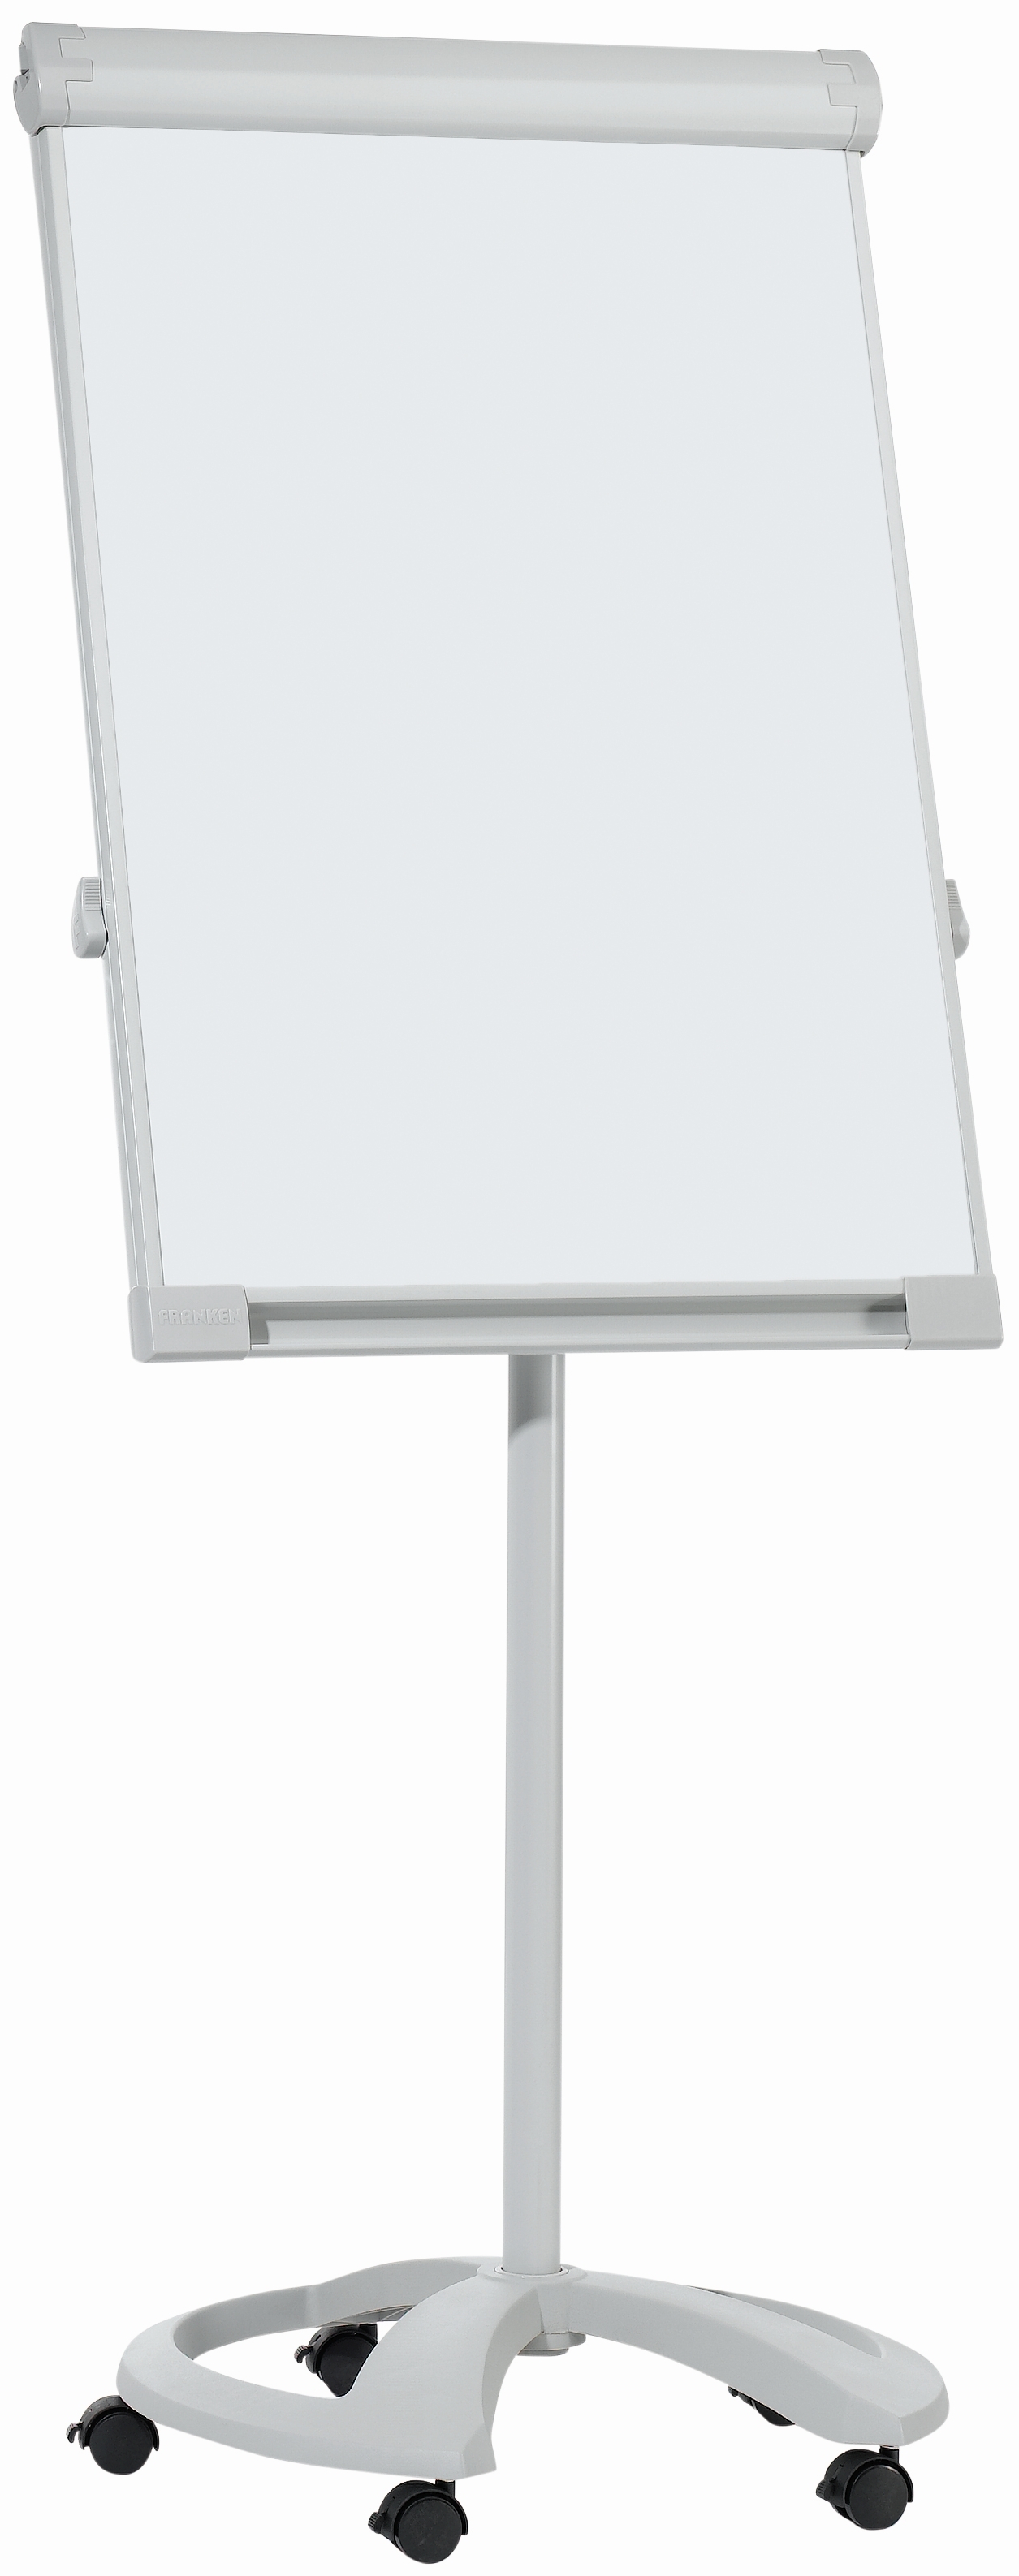 FRANKEN Tableau paperboard Deluxe FC81 Mobil 67x95cm,gris clair